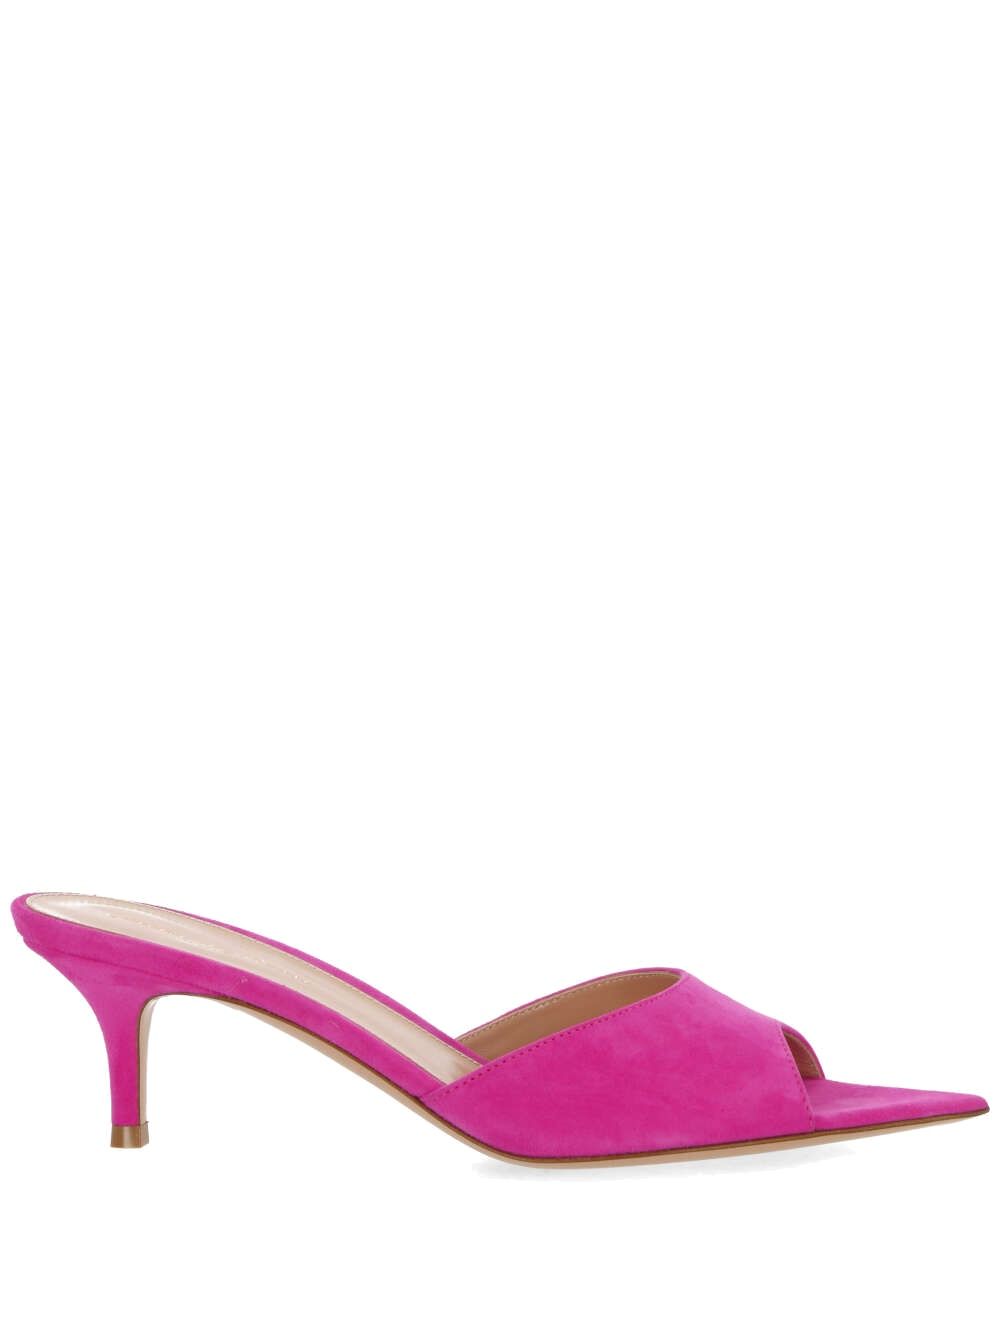 Fuchsia pink suede sandal